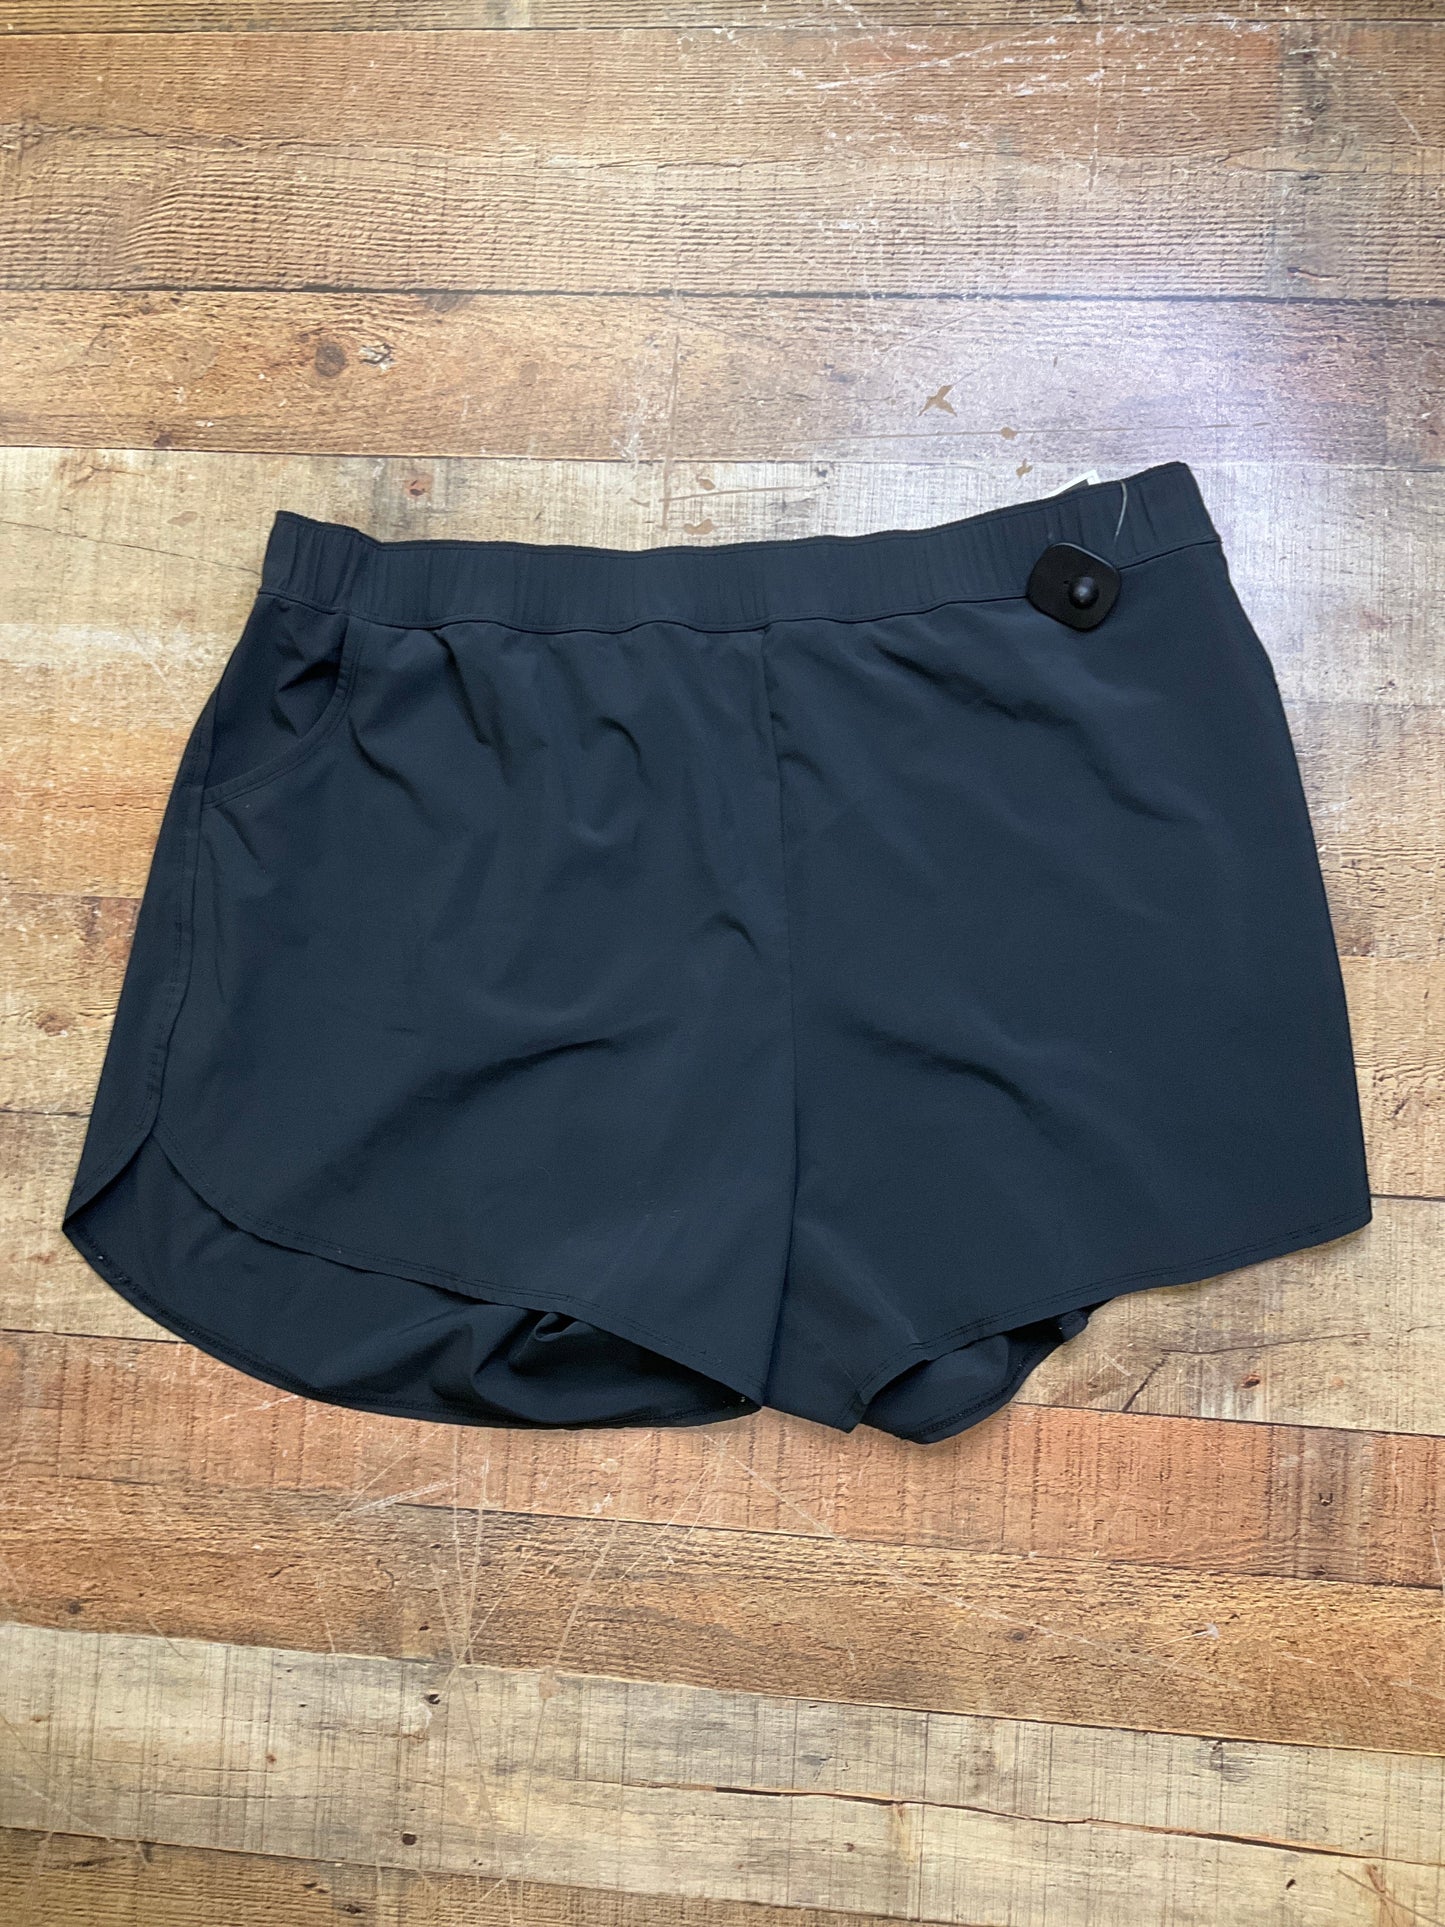 Black Athletic Shorts Torrid, Size 4x